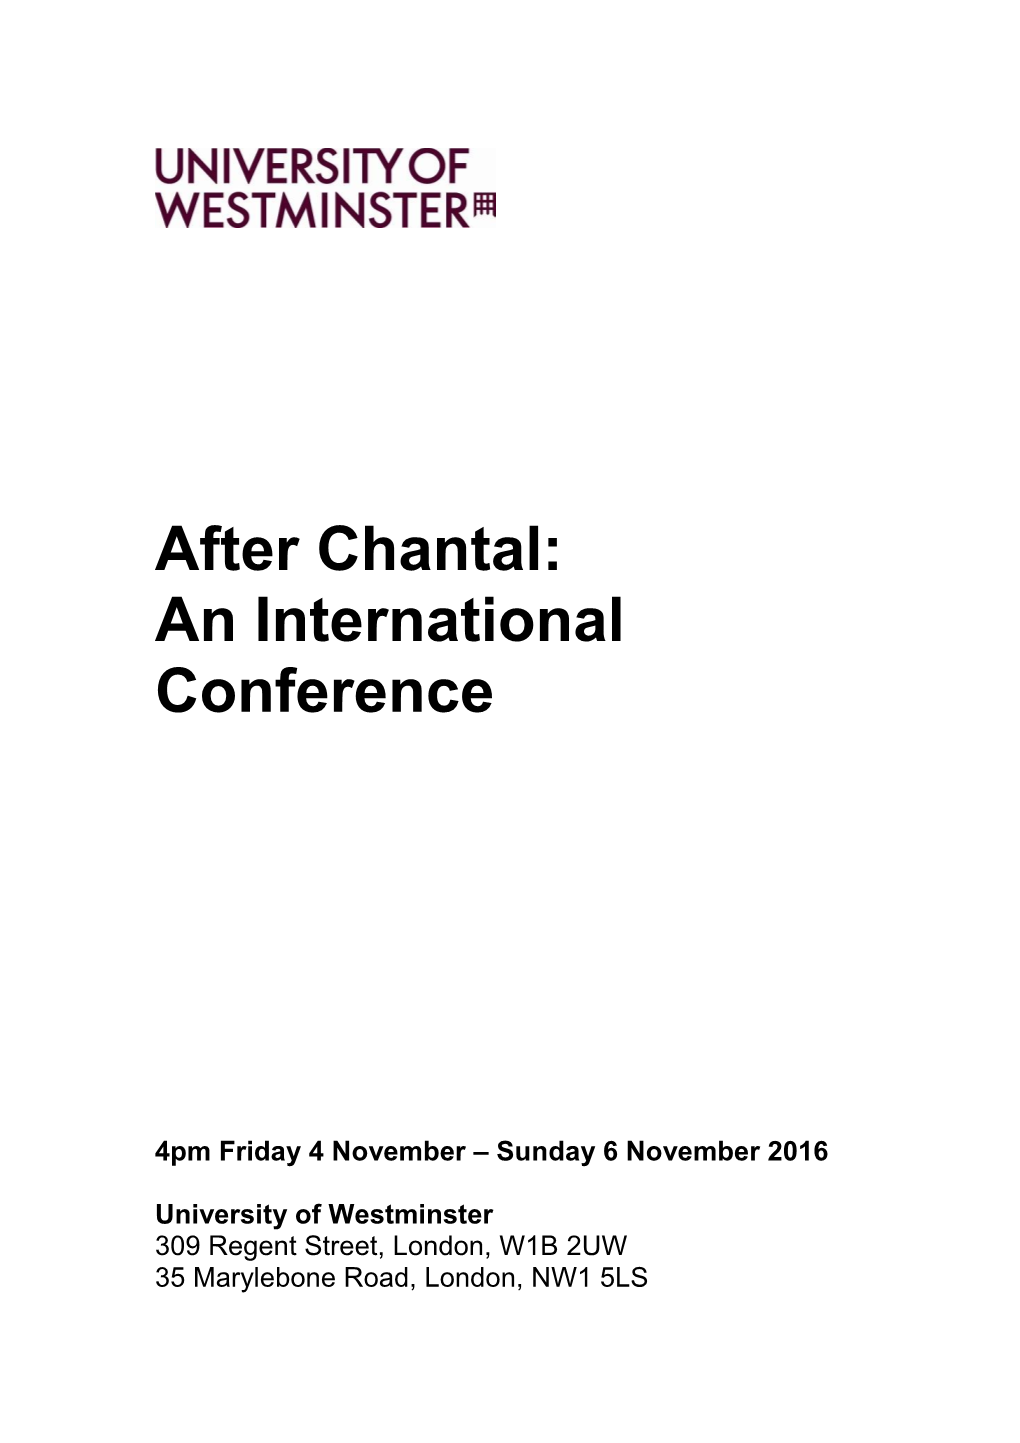 After Chantal: an International Conference